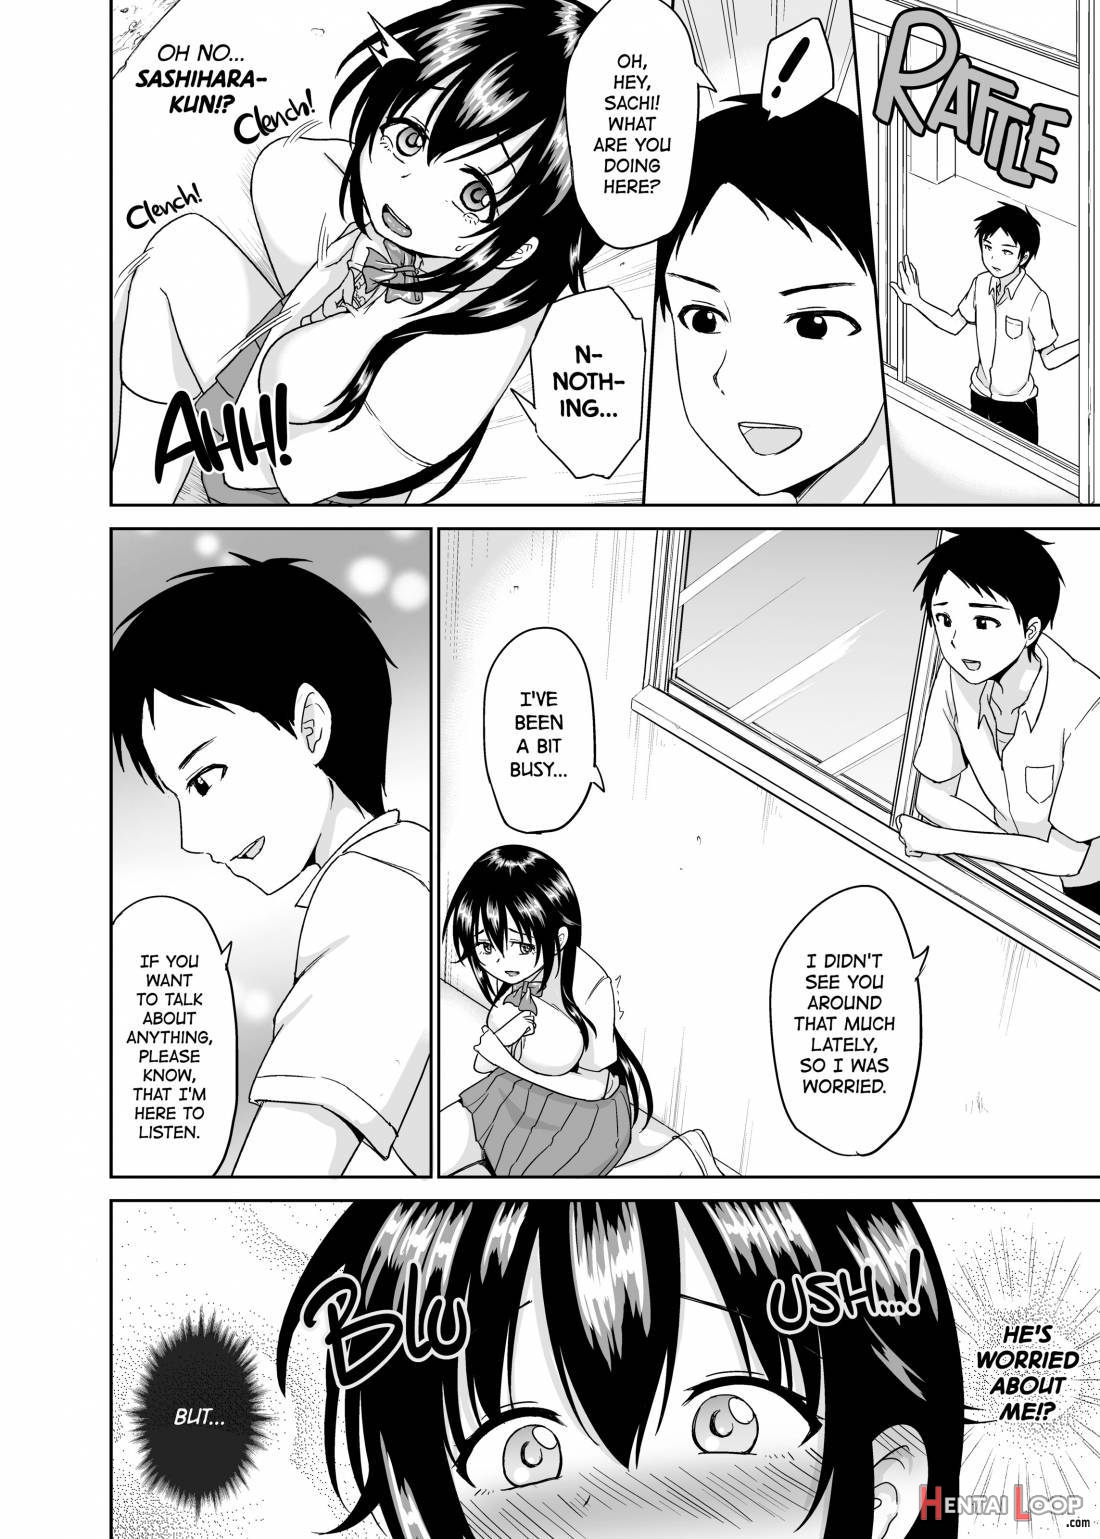 Sachi-chan no Arbeit 3 page 11